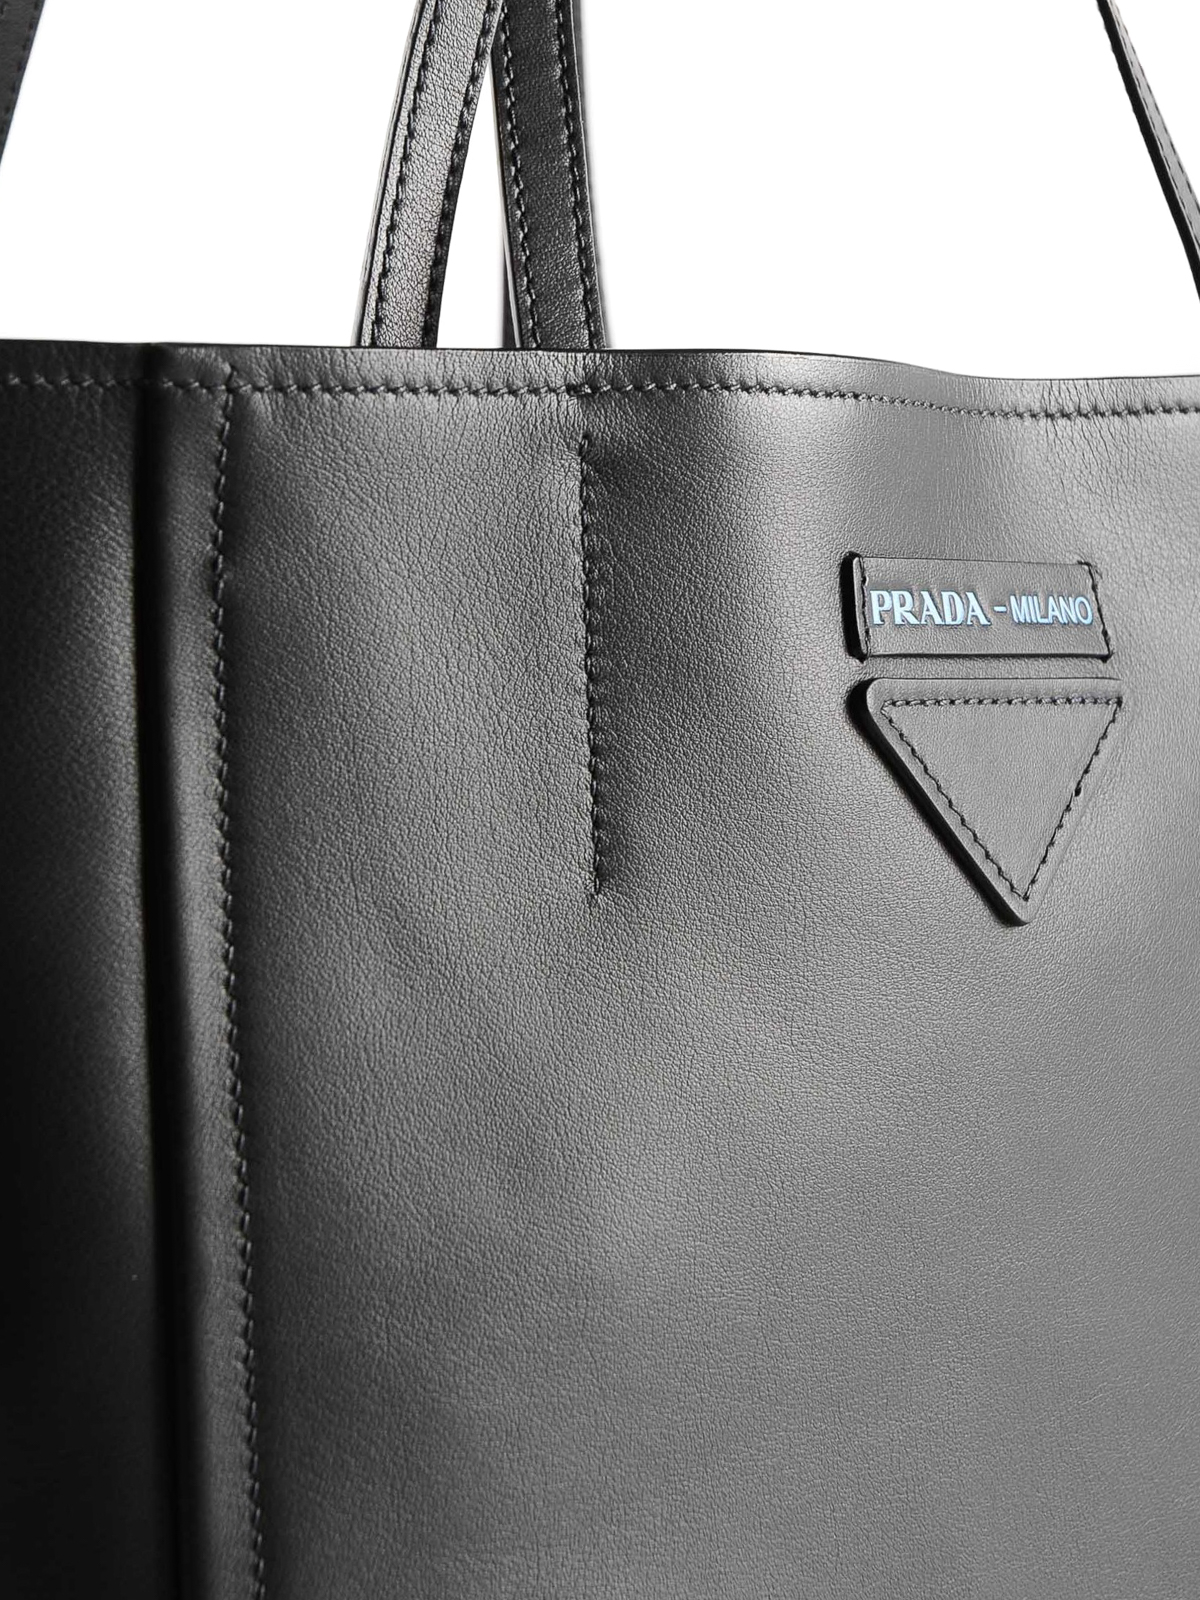 Prada - Concept small black leather tote bag - totes bags - 1BG2092B2JOK0